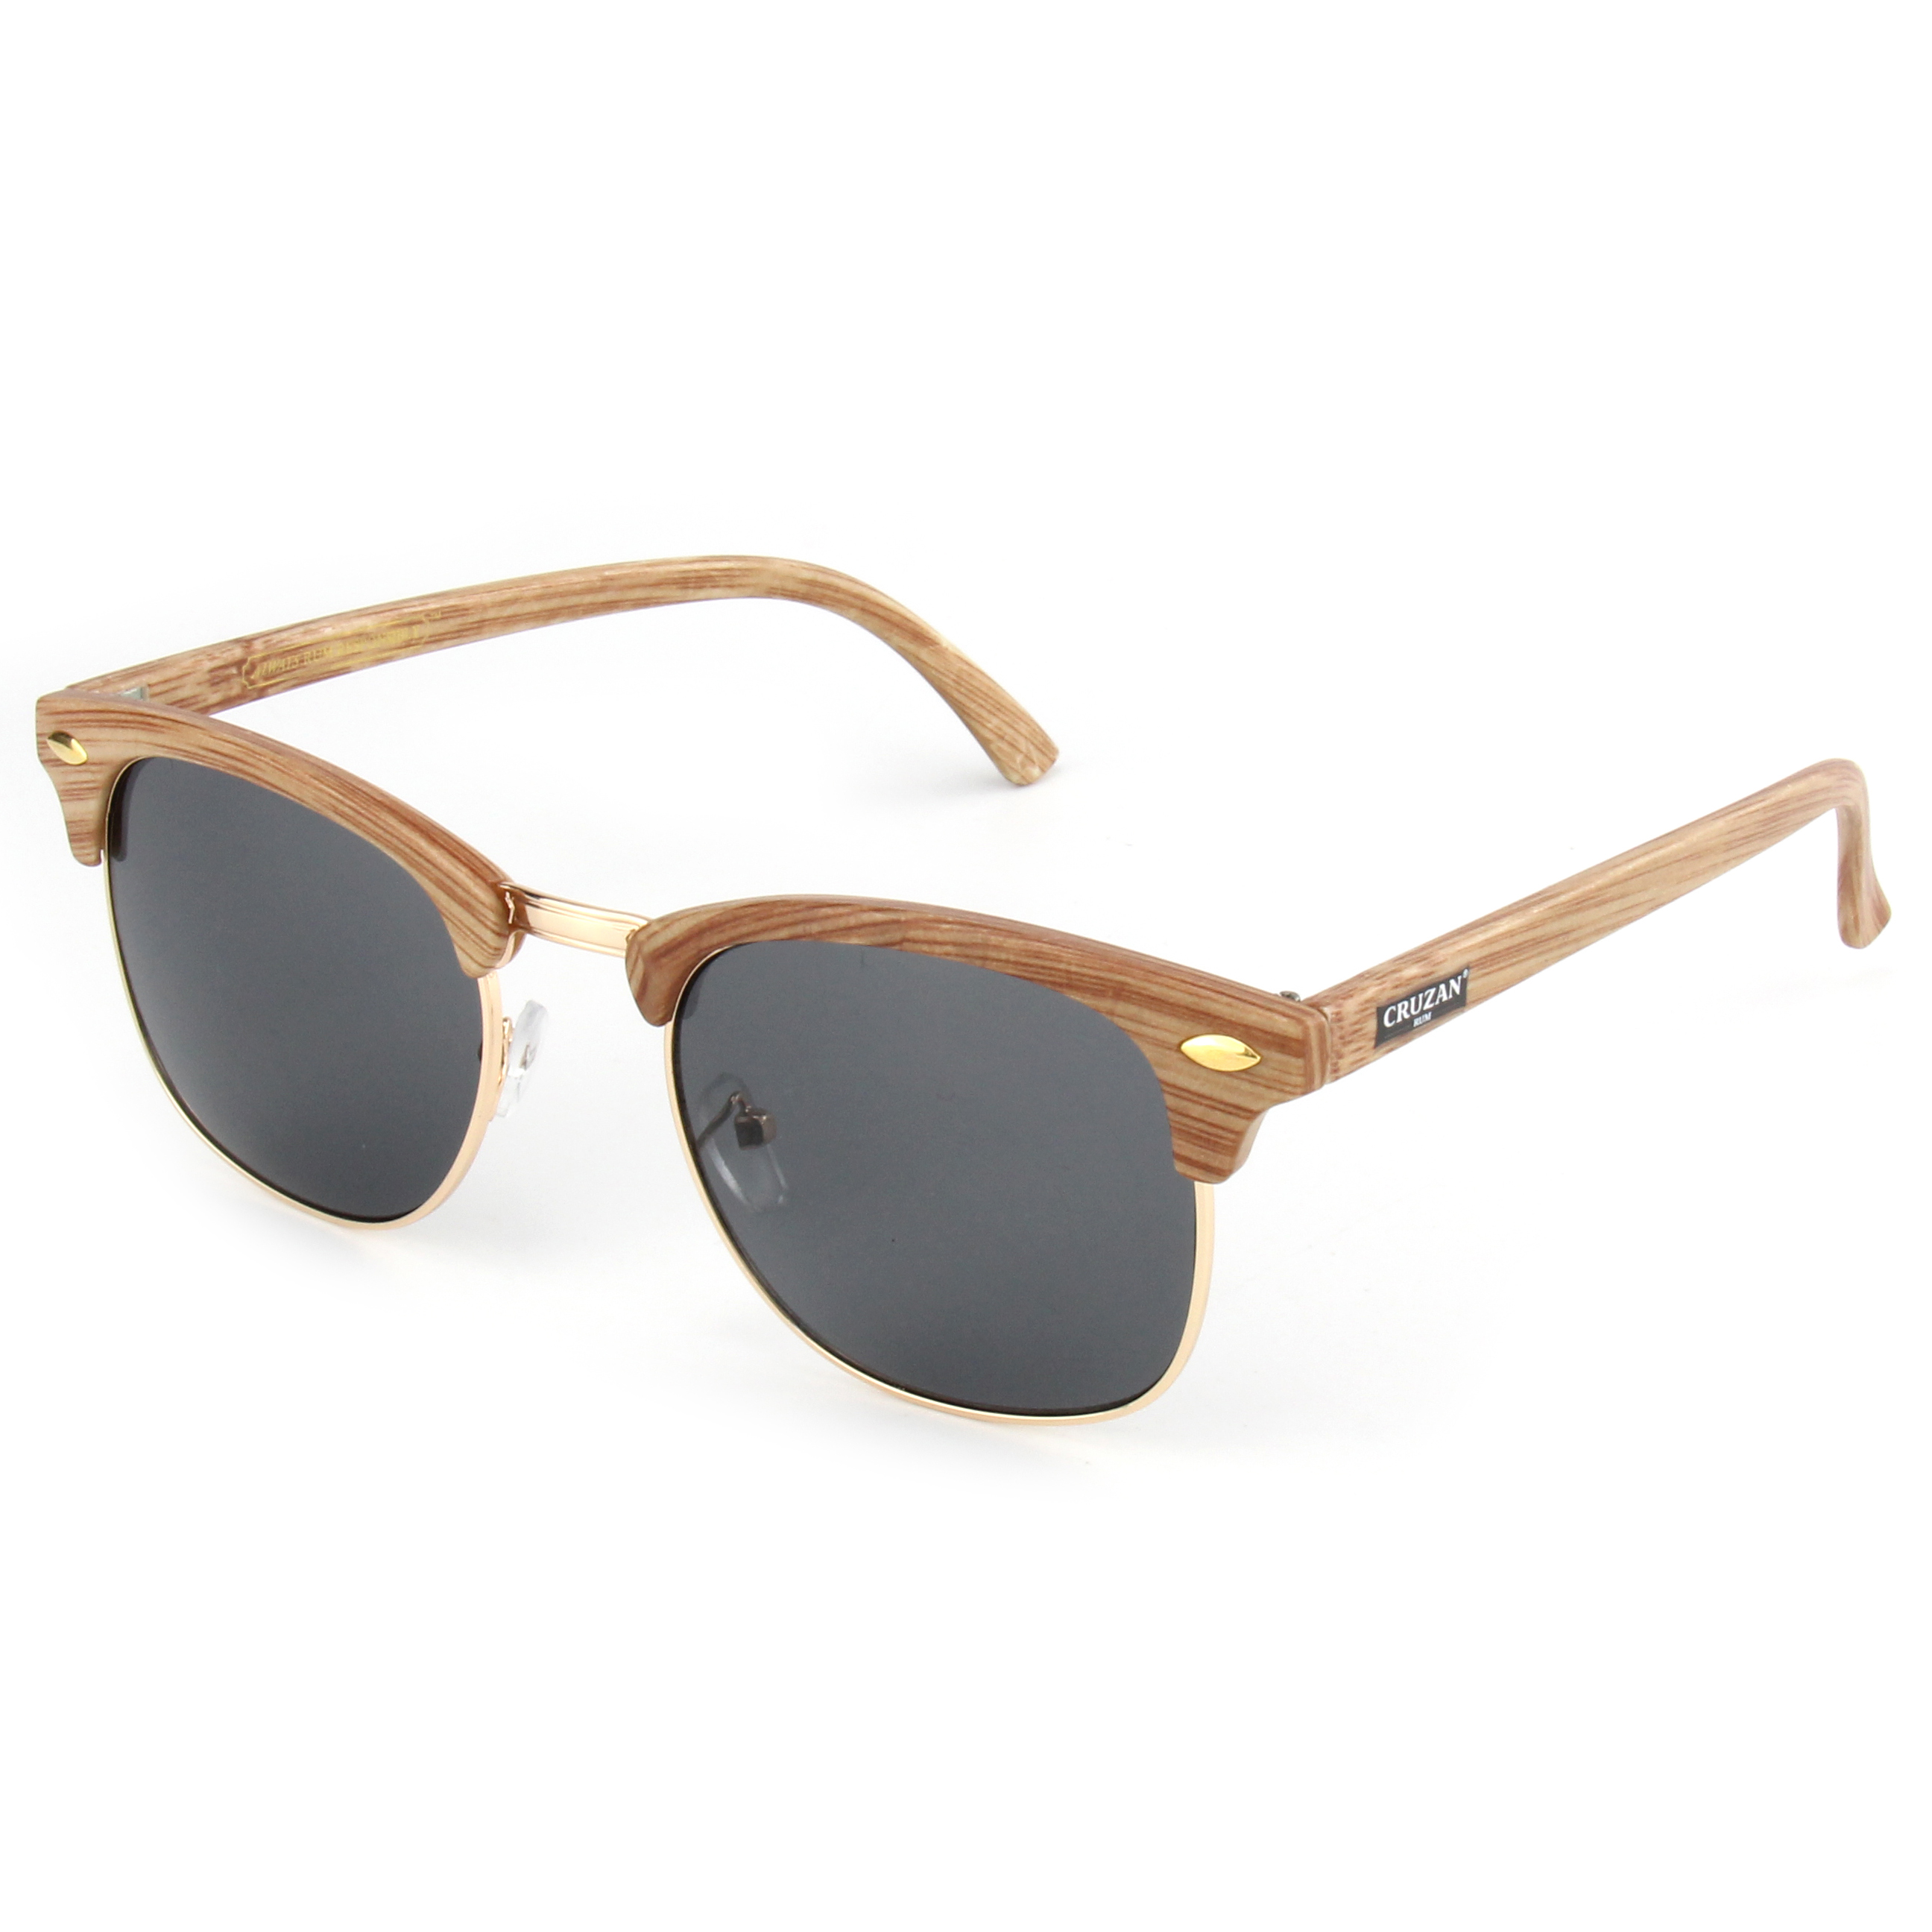 EUGENIA Classic Wooden Design Custom Logo Printed UV400 Protection Unisex Sunglasses